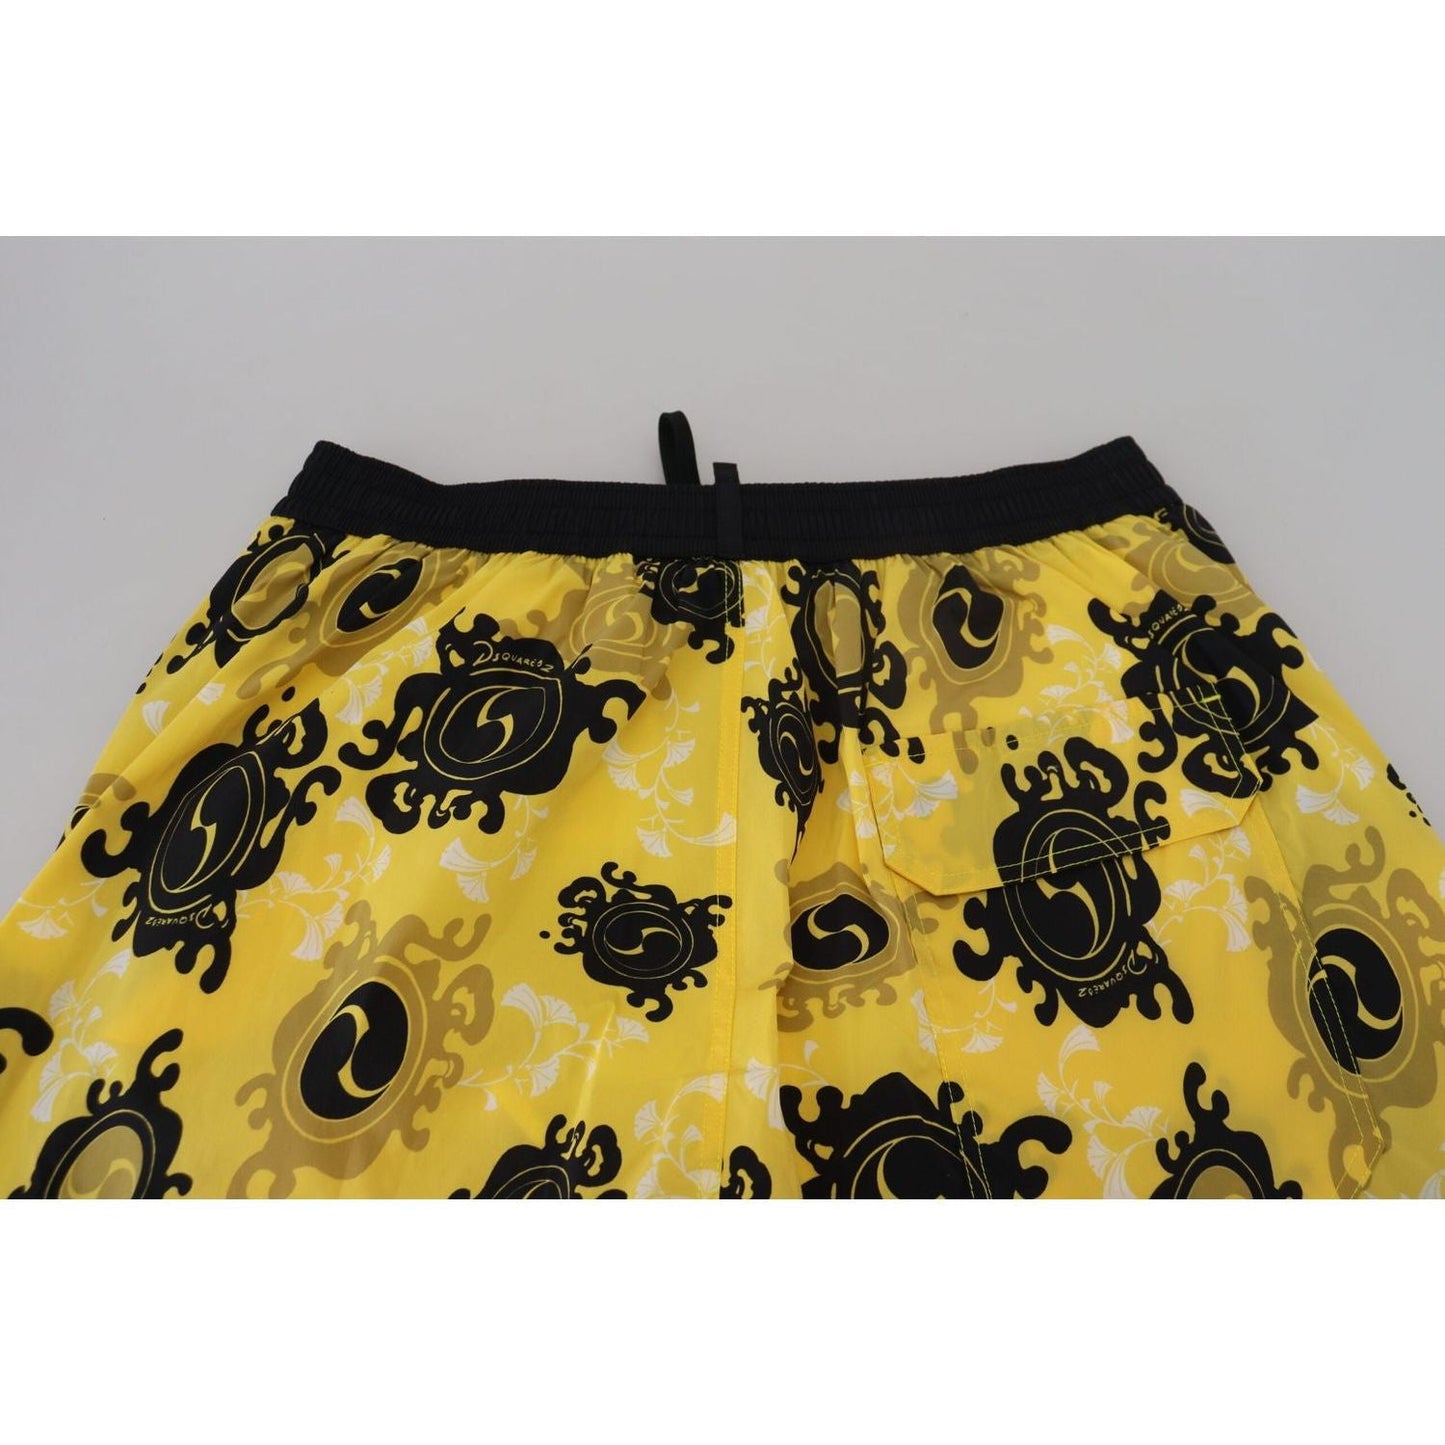 Dsquared² Yellow Block Print Swim Shorts Boxer yellow-black-printed-men-beachwear-shorts-swimwear IMG_5986-scaled-2ffb651c-a71.jpg